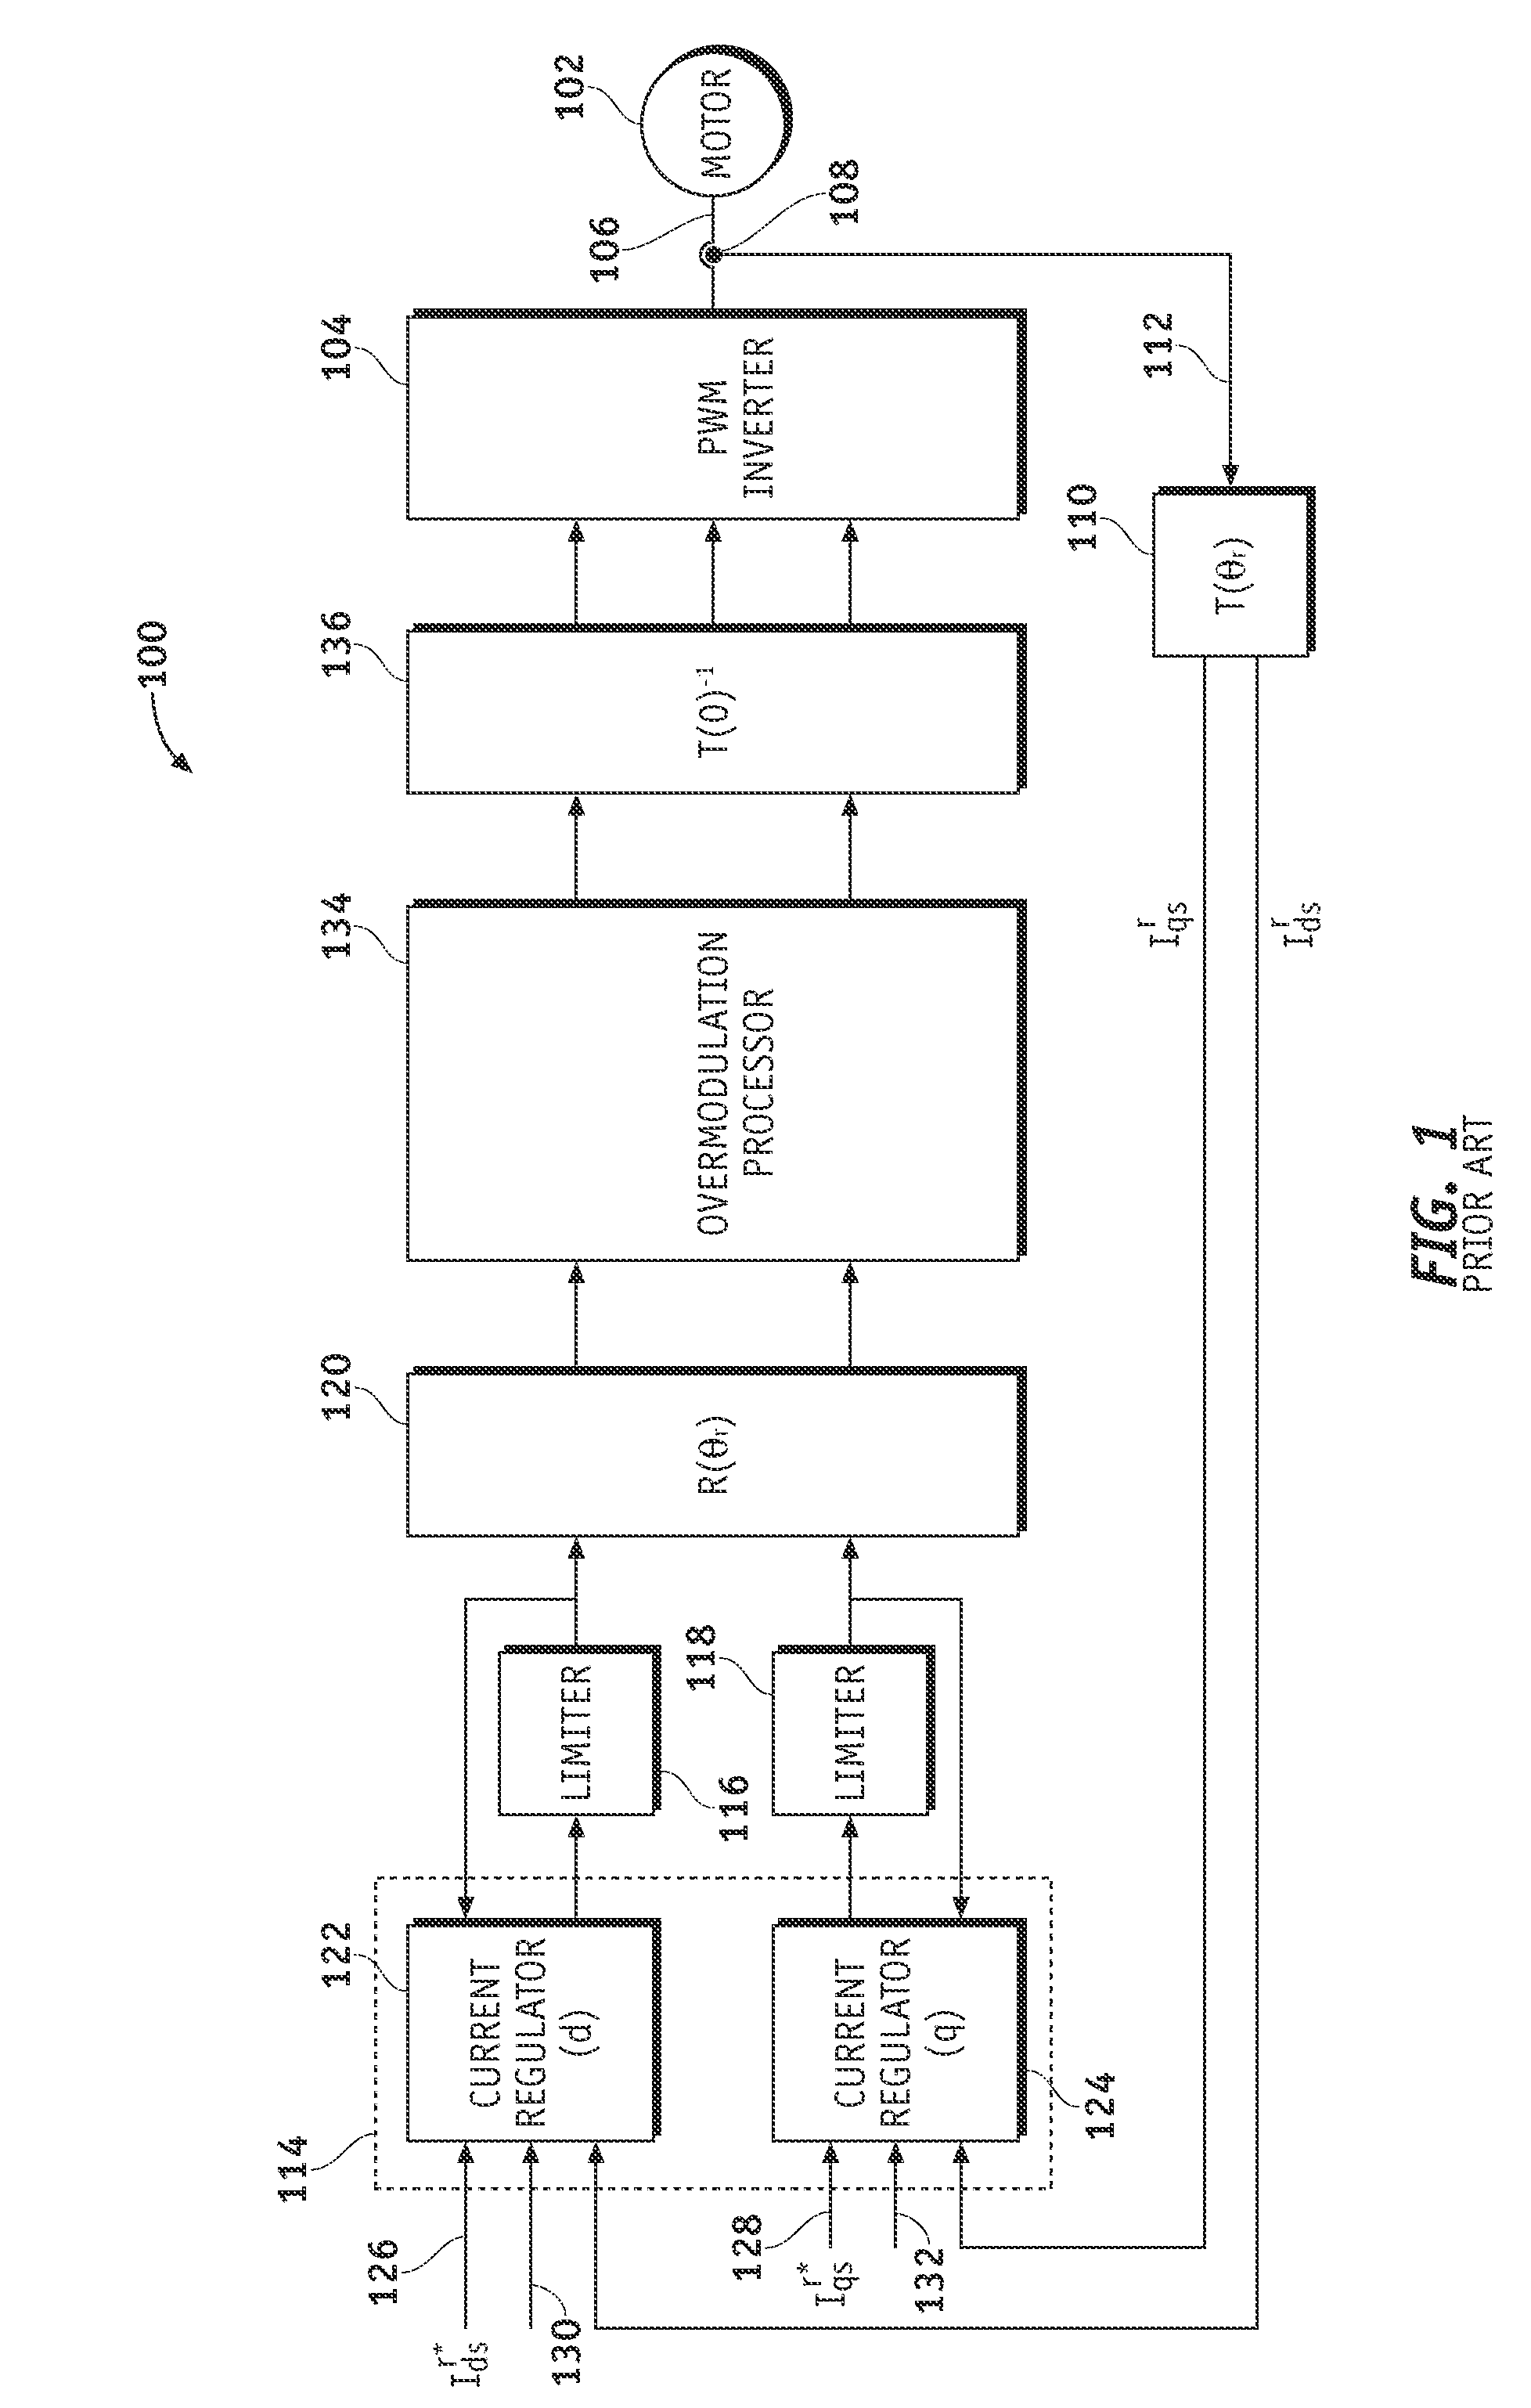 Anti-windup control for a current regulator of a pulse width modulation inverter